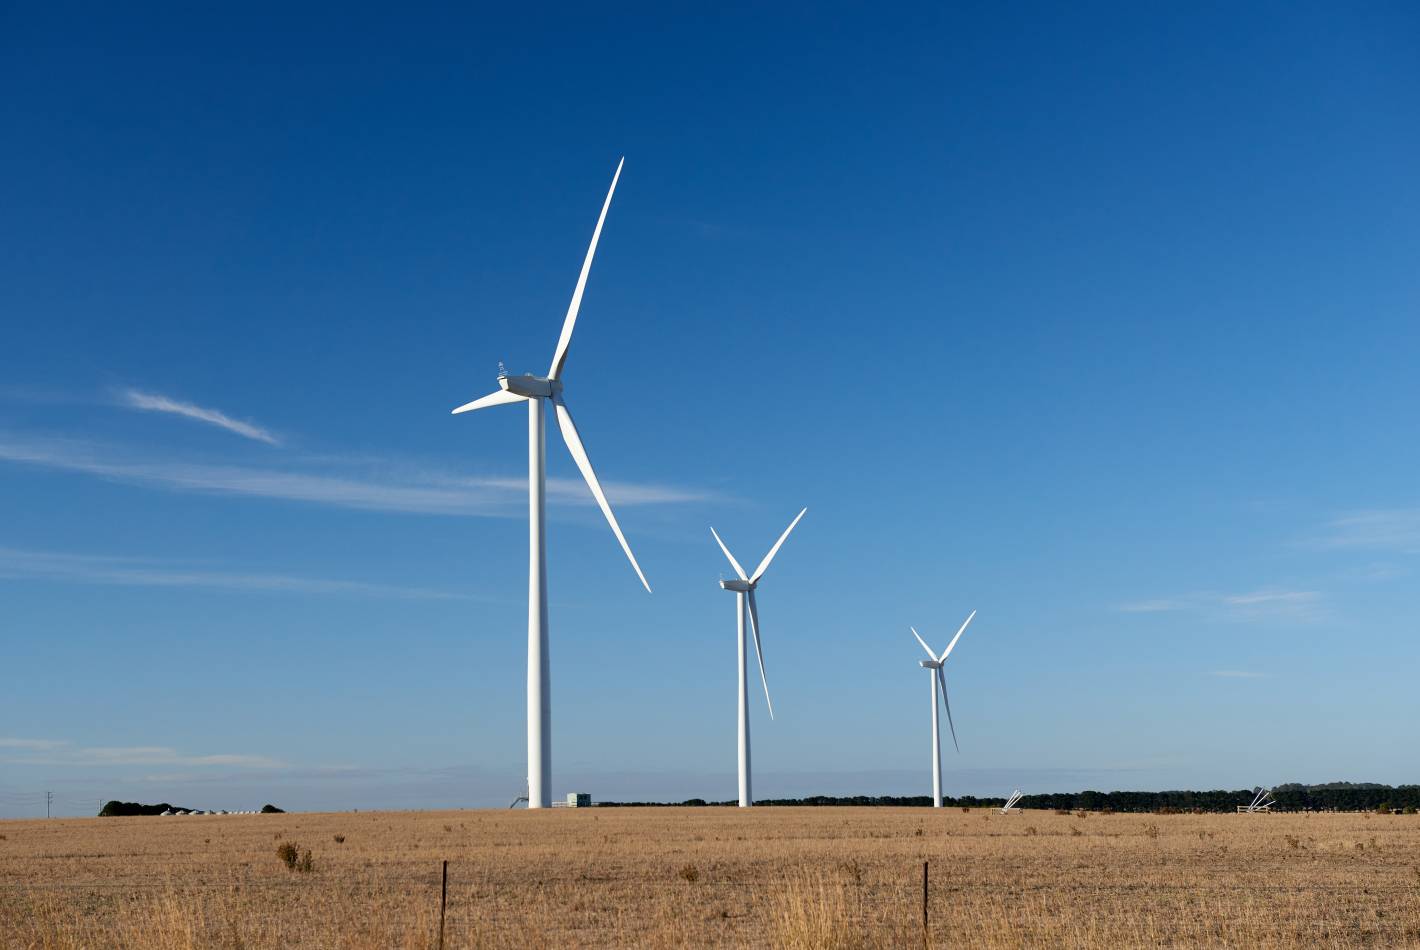 Coopers Gap Wind Farm